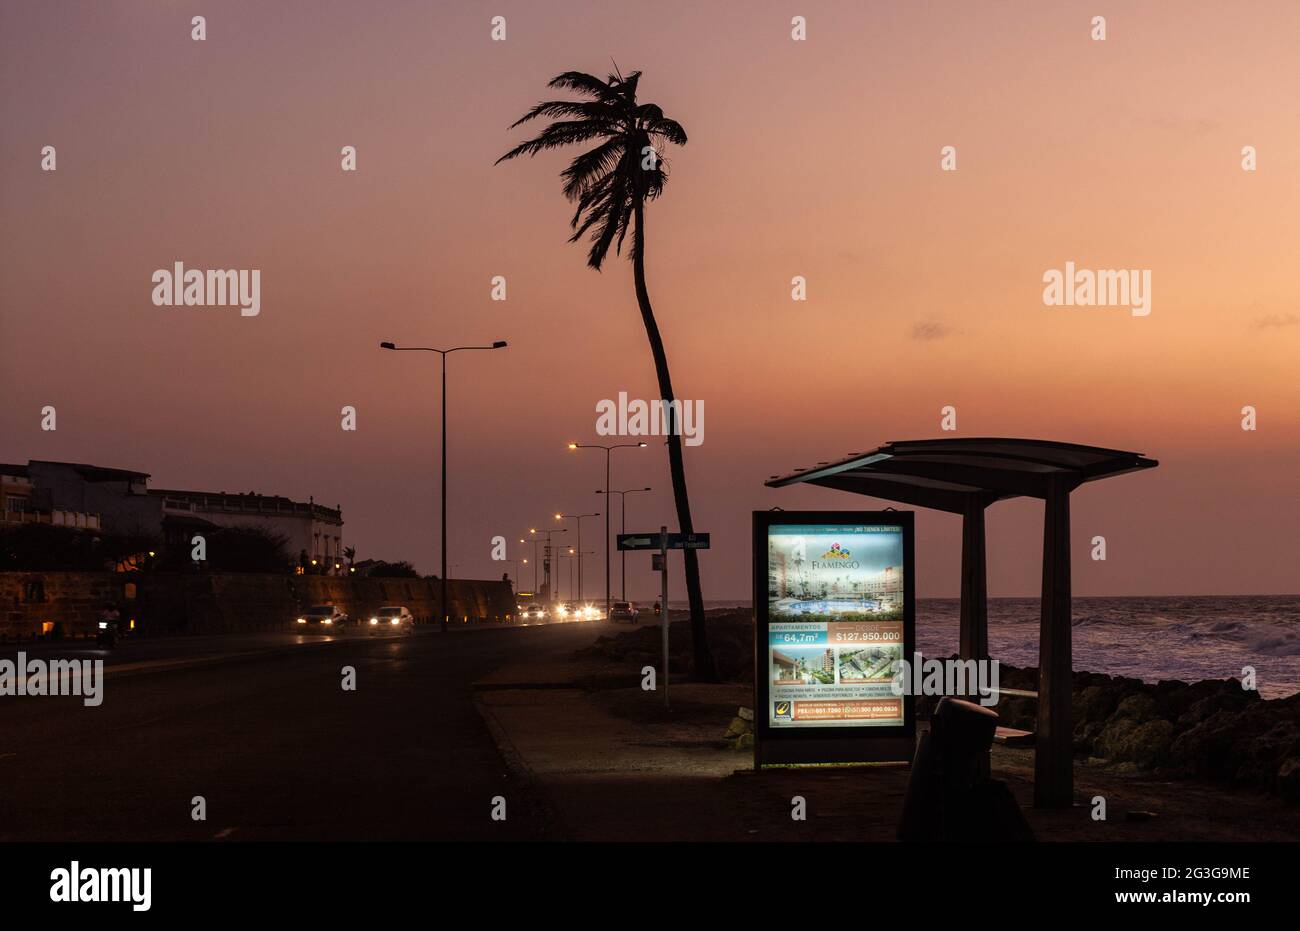 Bus shelter and palm tree on Avenida Santander, Cartagena de Indias, Colombia. Stock Photo